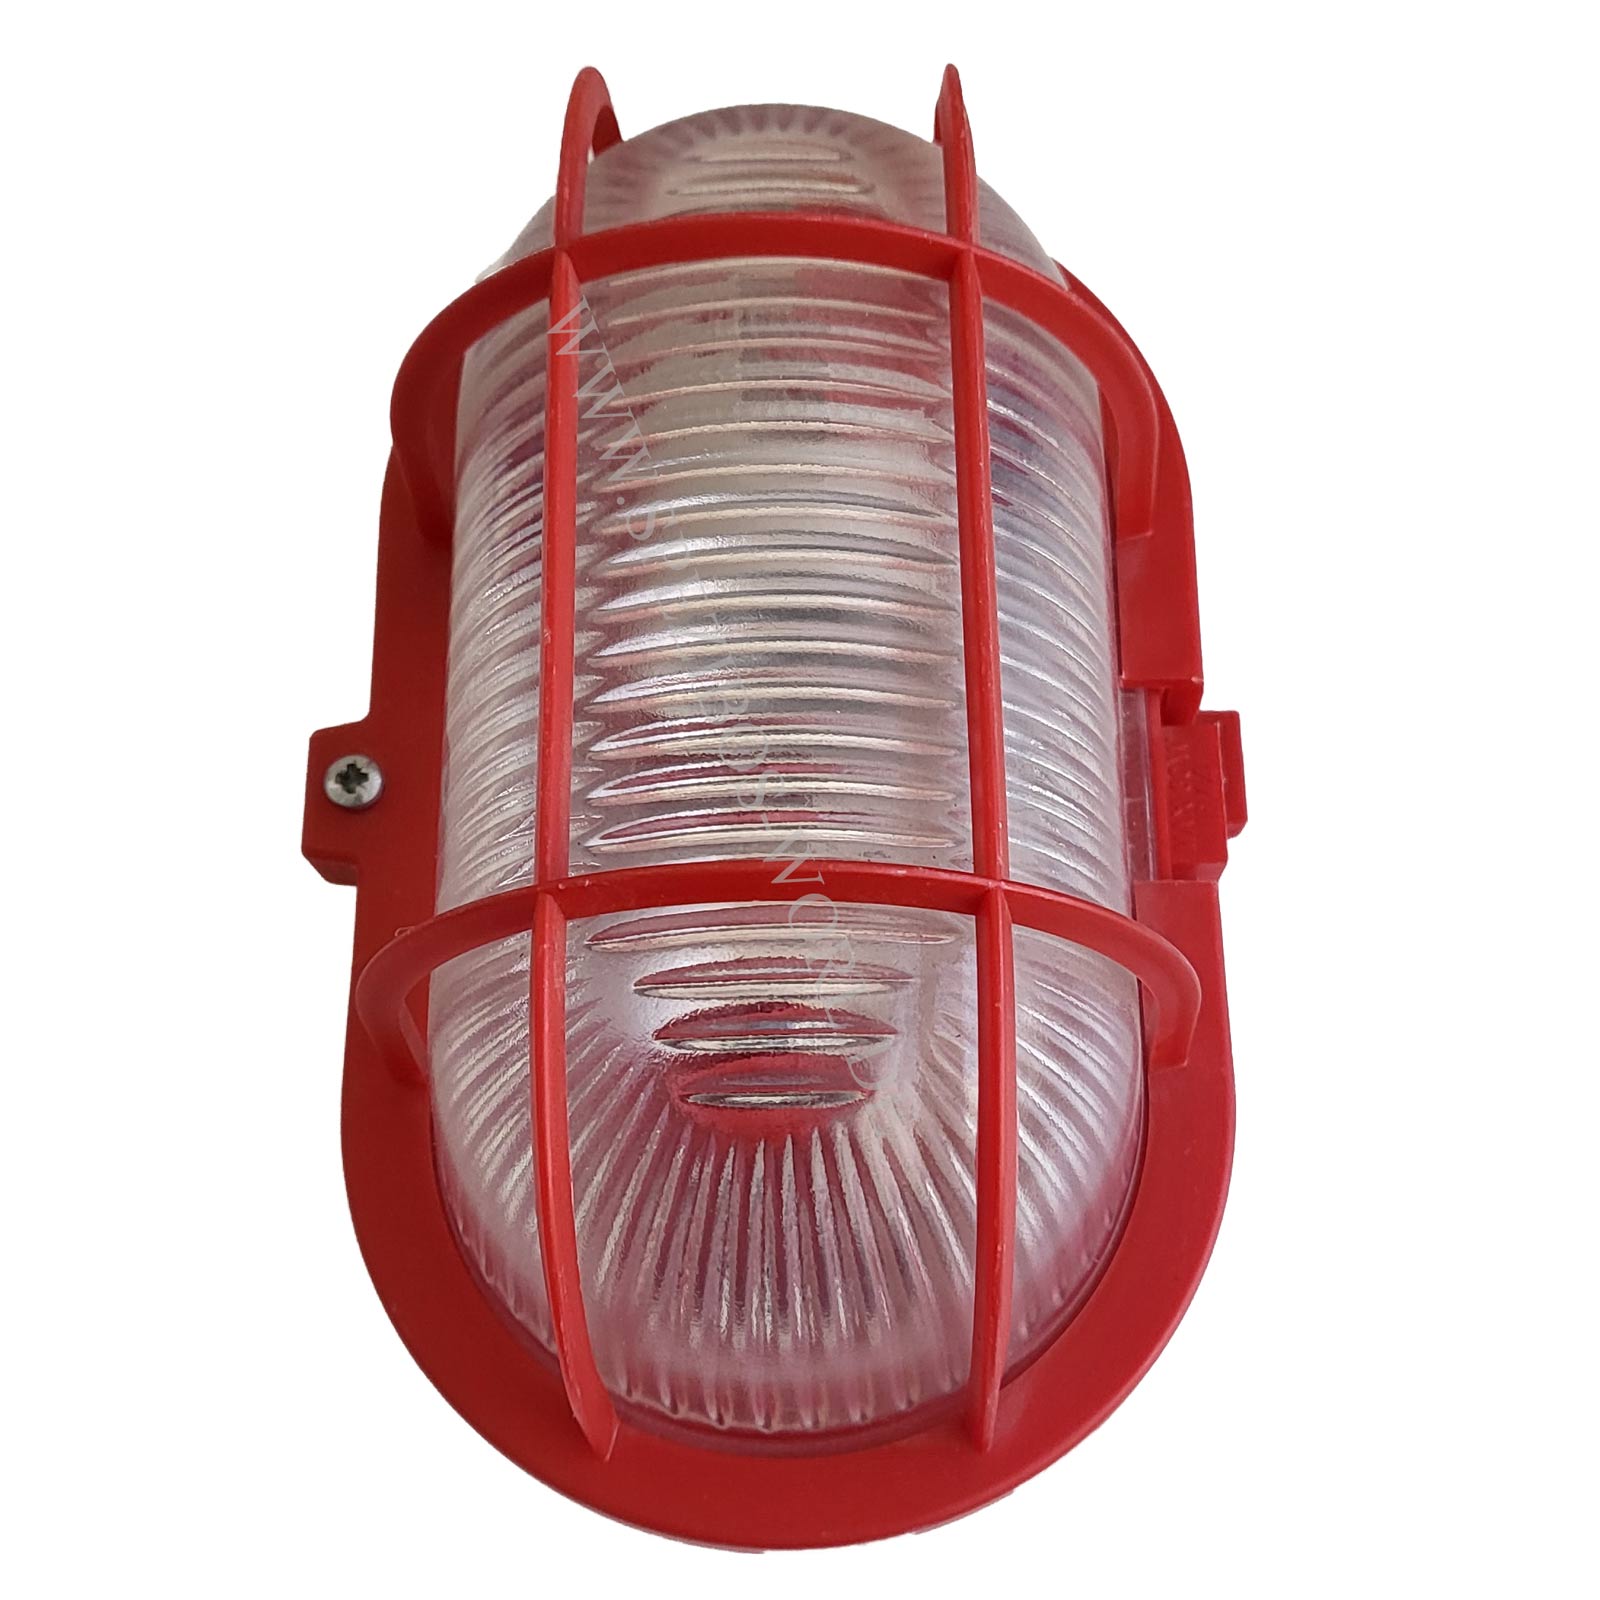 Ovalarmatur Fassung , Spezibos-world Kopp rot Kellerlampe E27